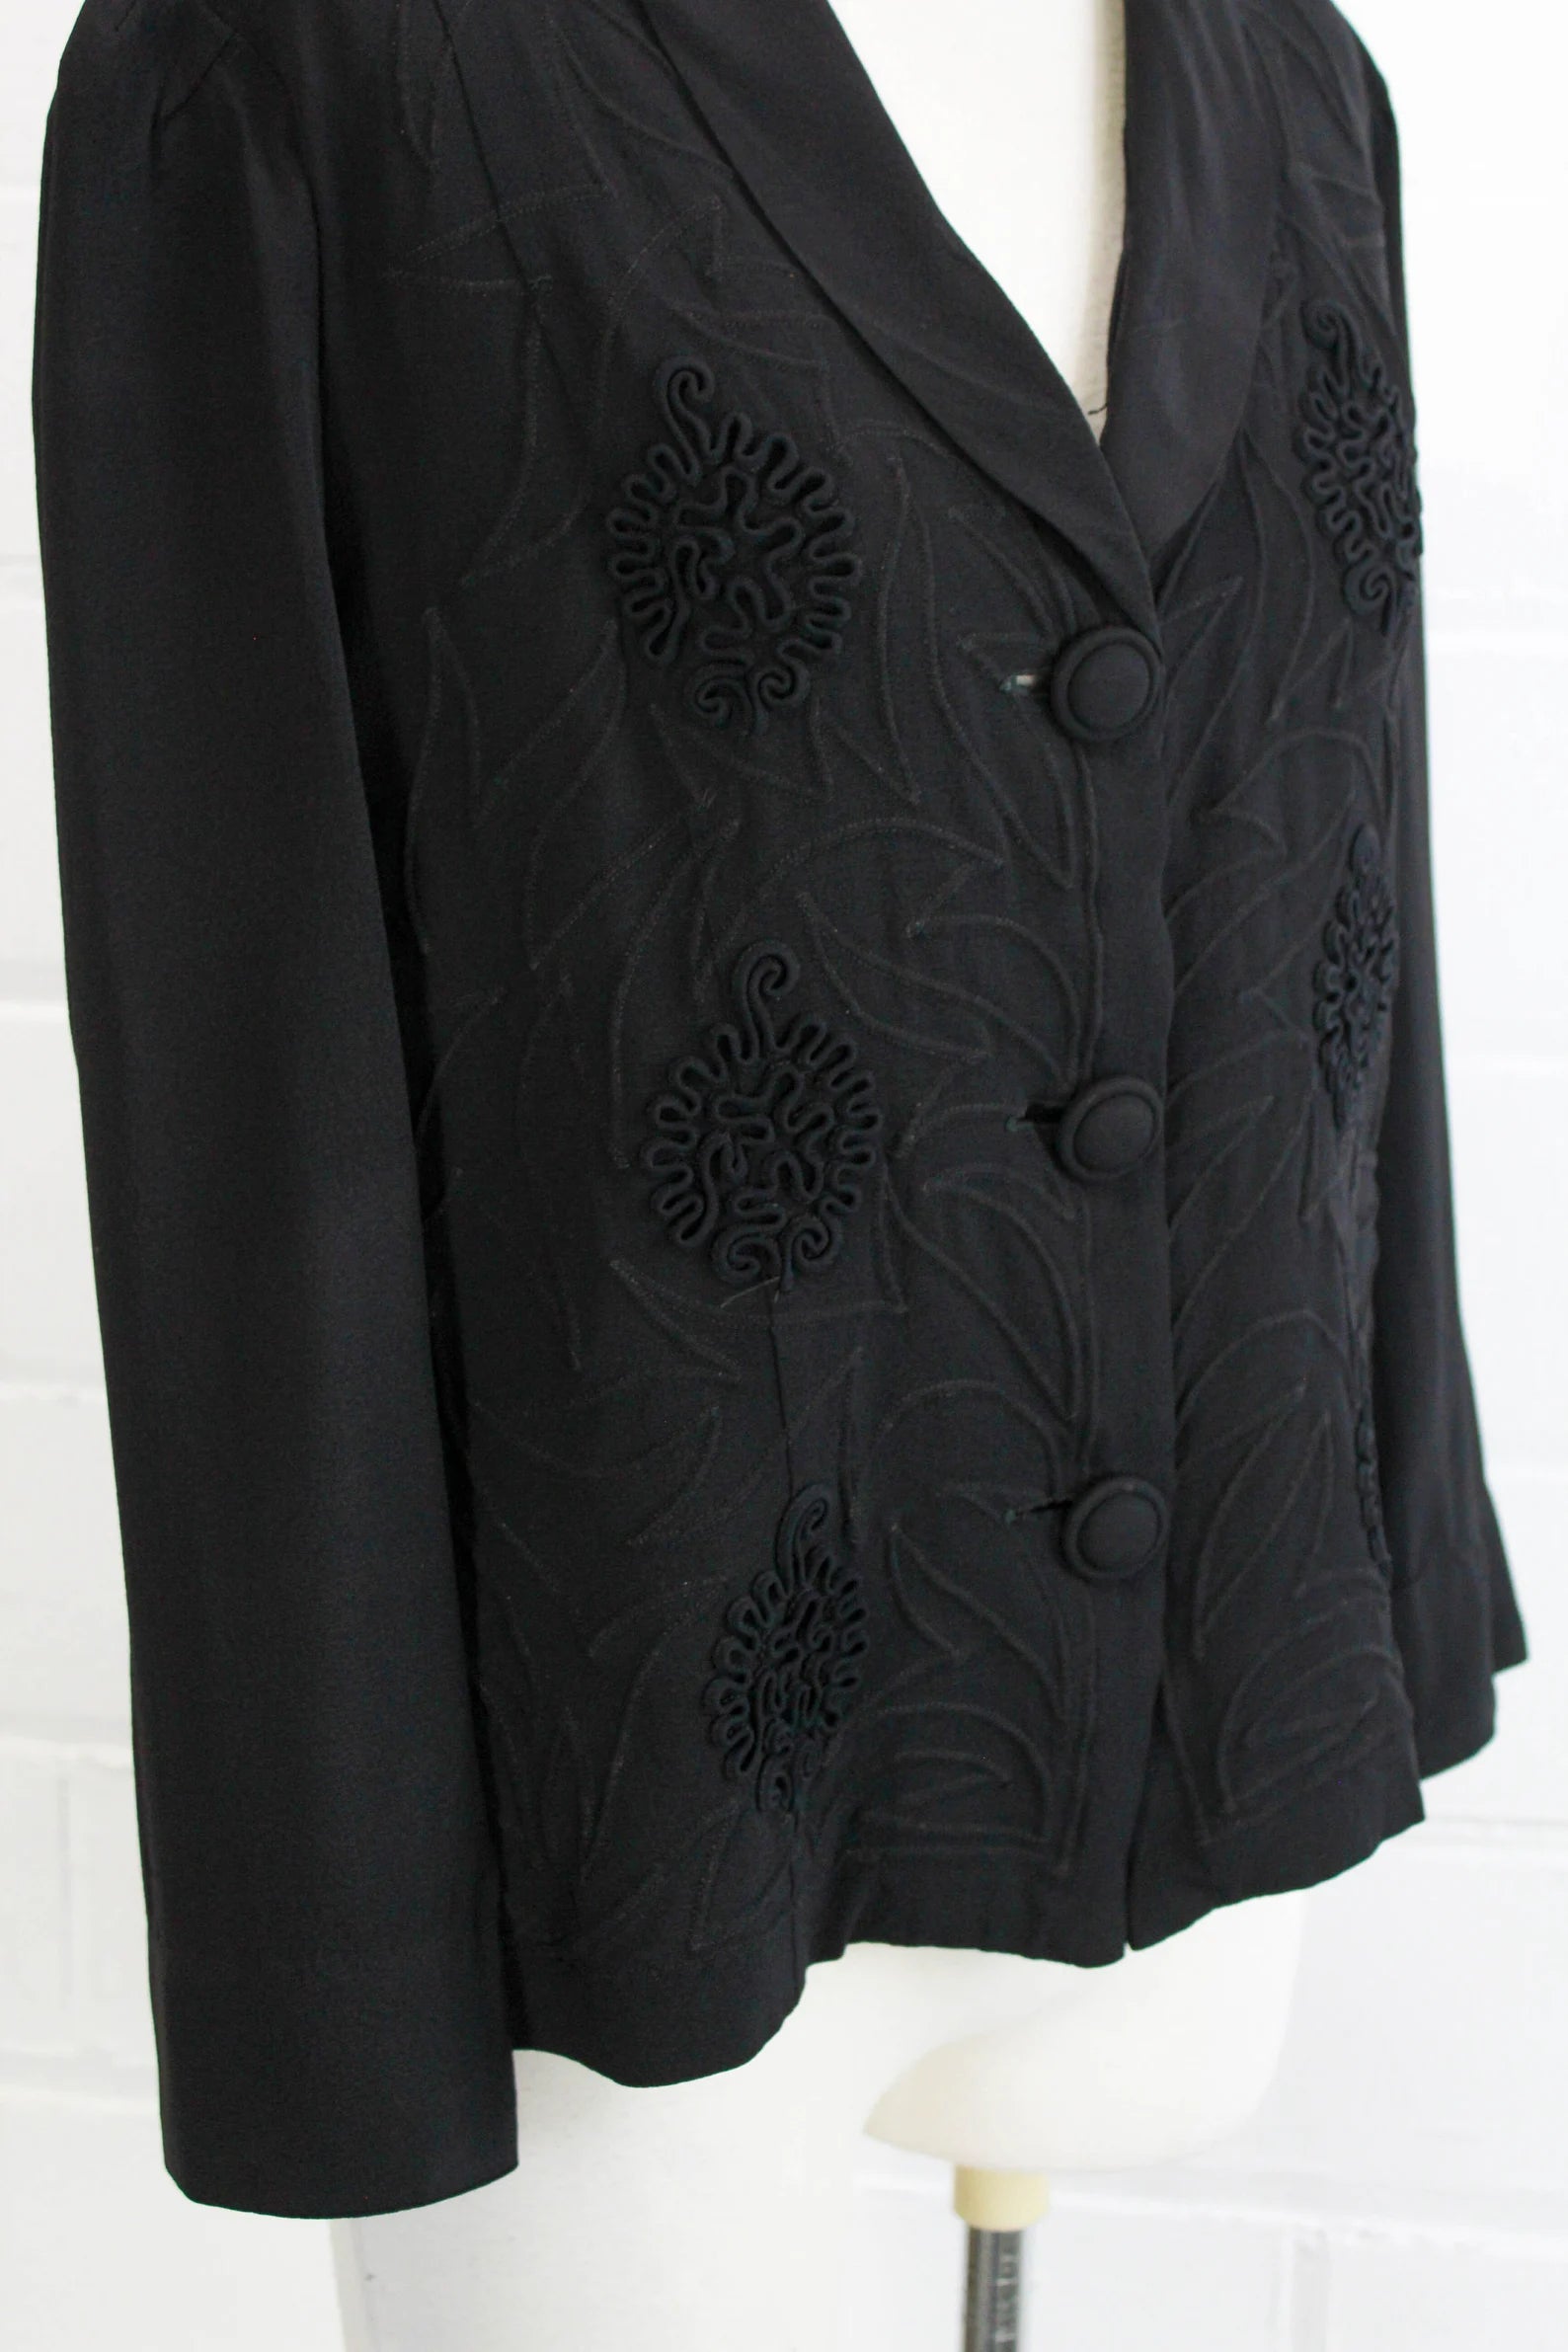 Vintage 1940s Black Soutache Embroidered Rayon Crepe Jacket, Small